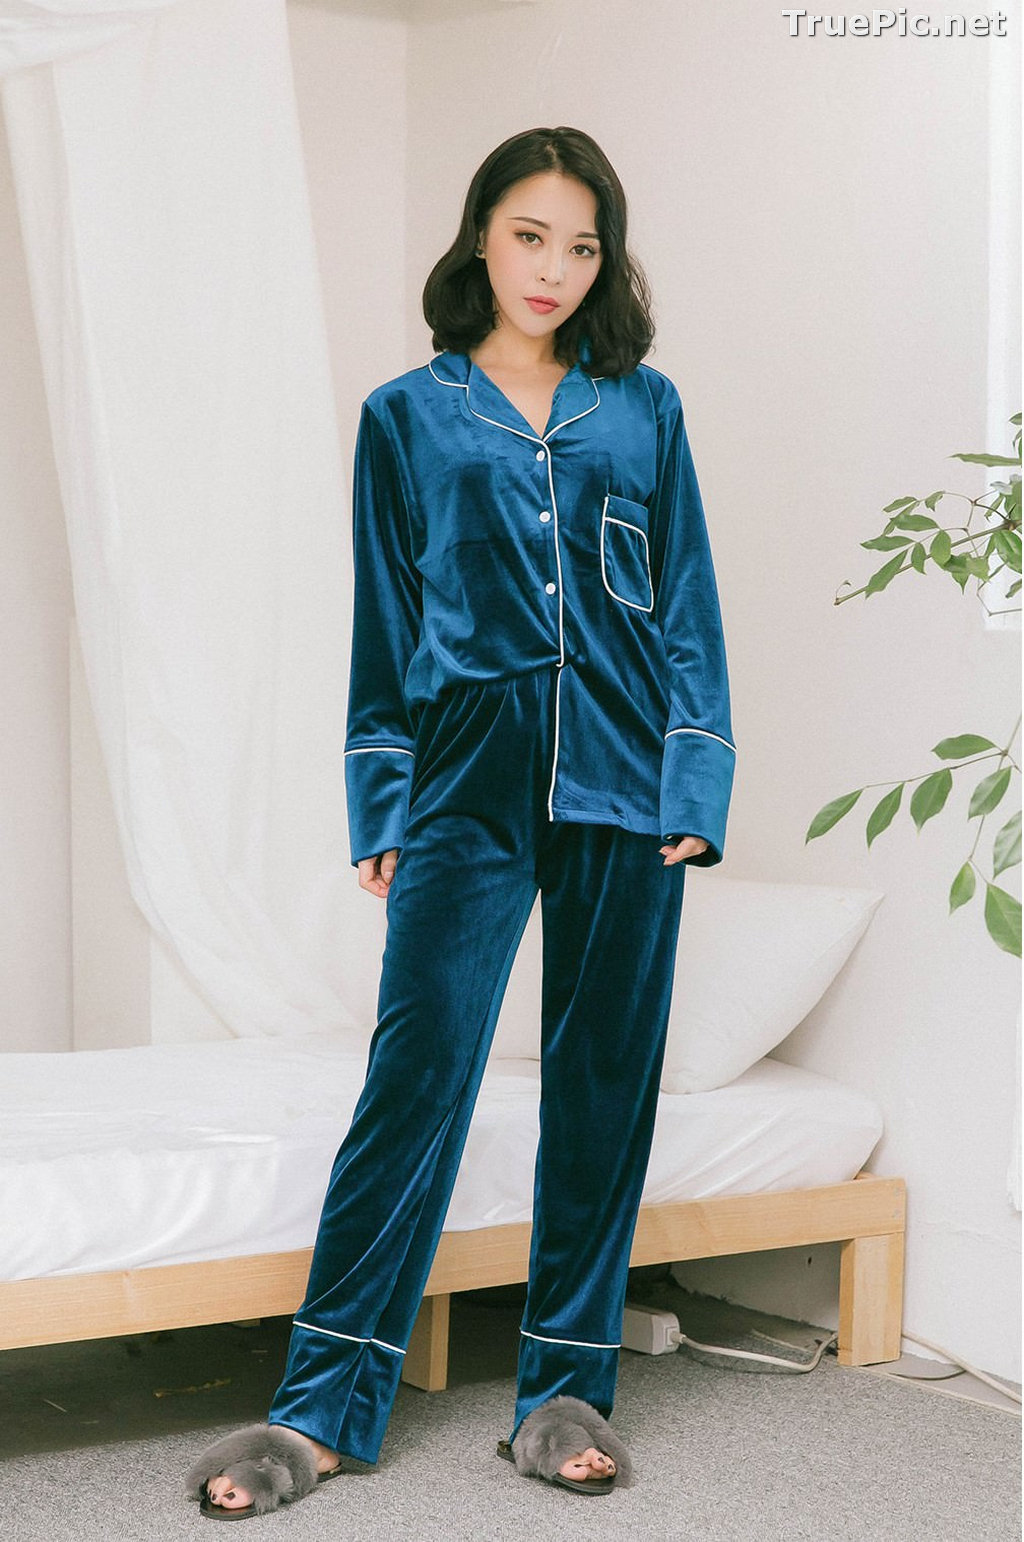 Image Ryu Hyeonju - Korean Fashion Model - Pijama and Lingerie Set - TruePic.net - Picture-32